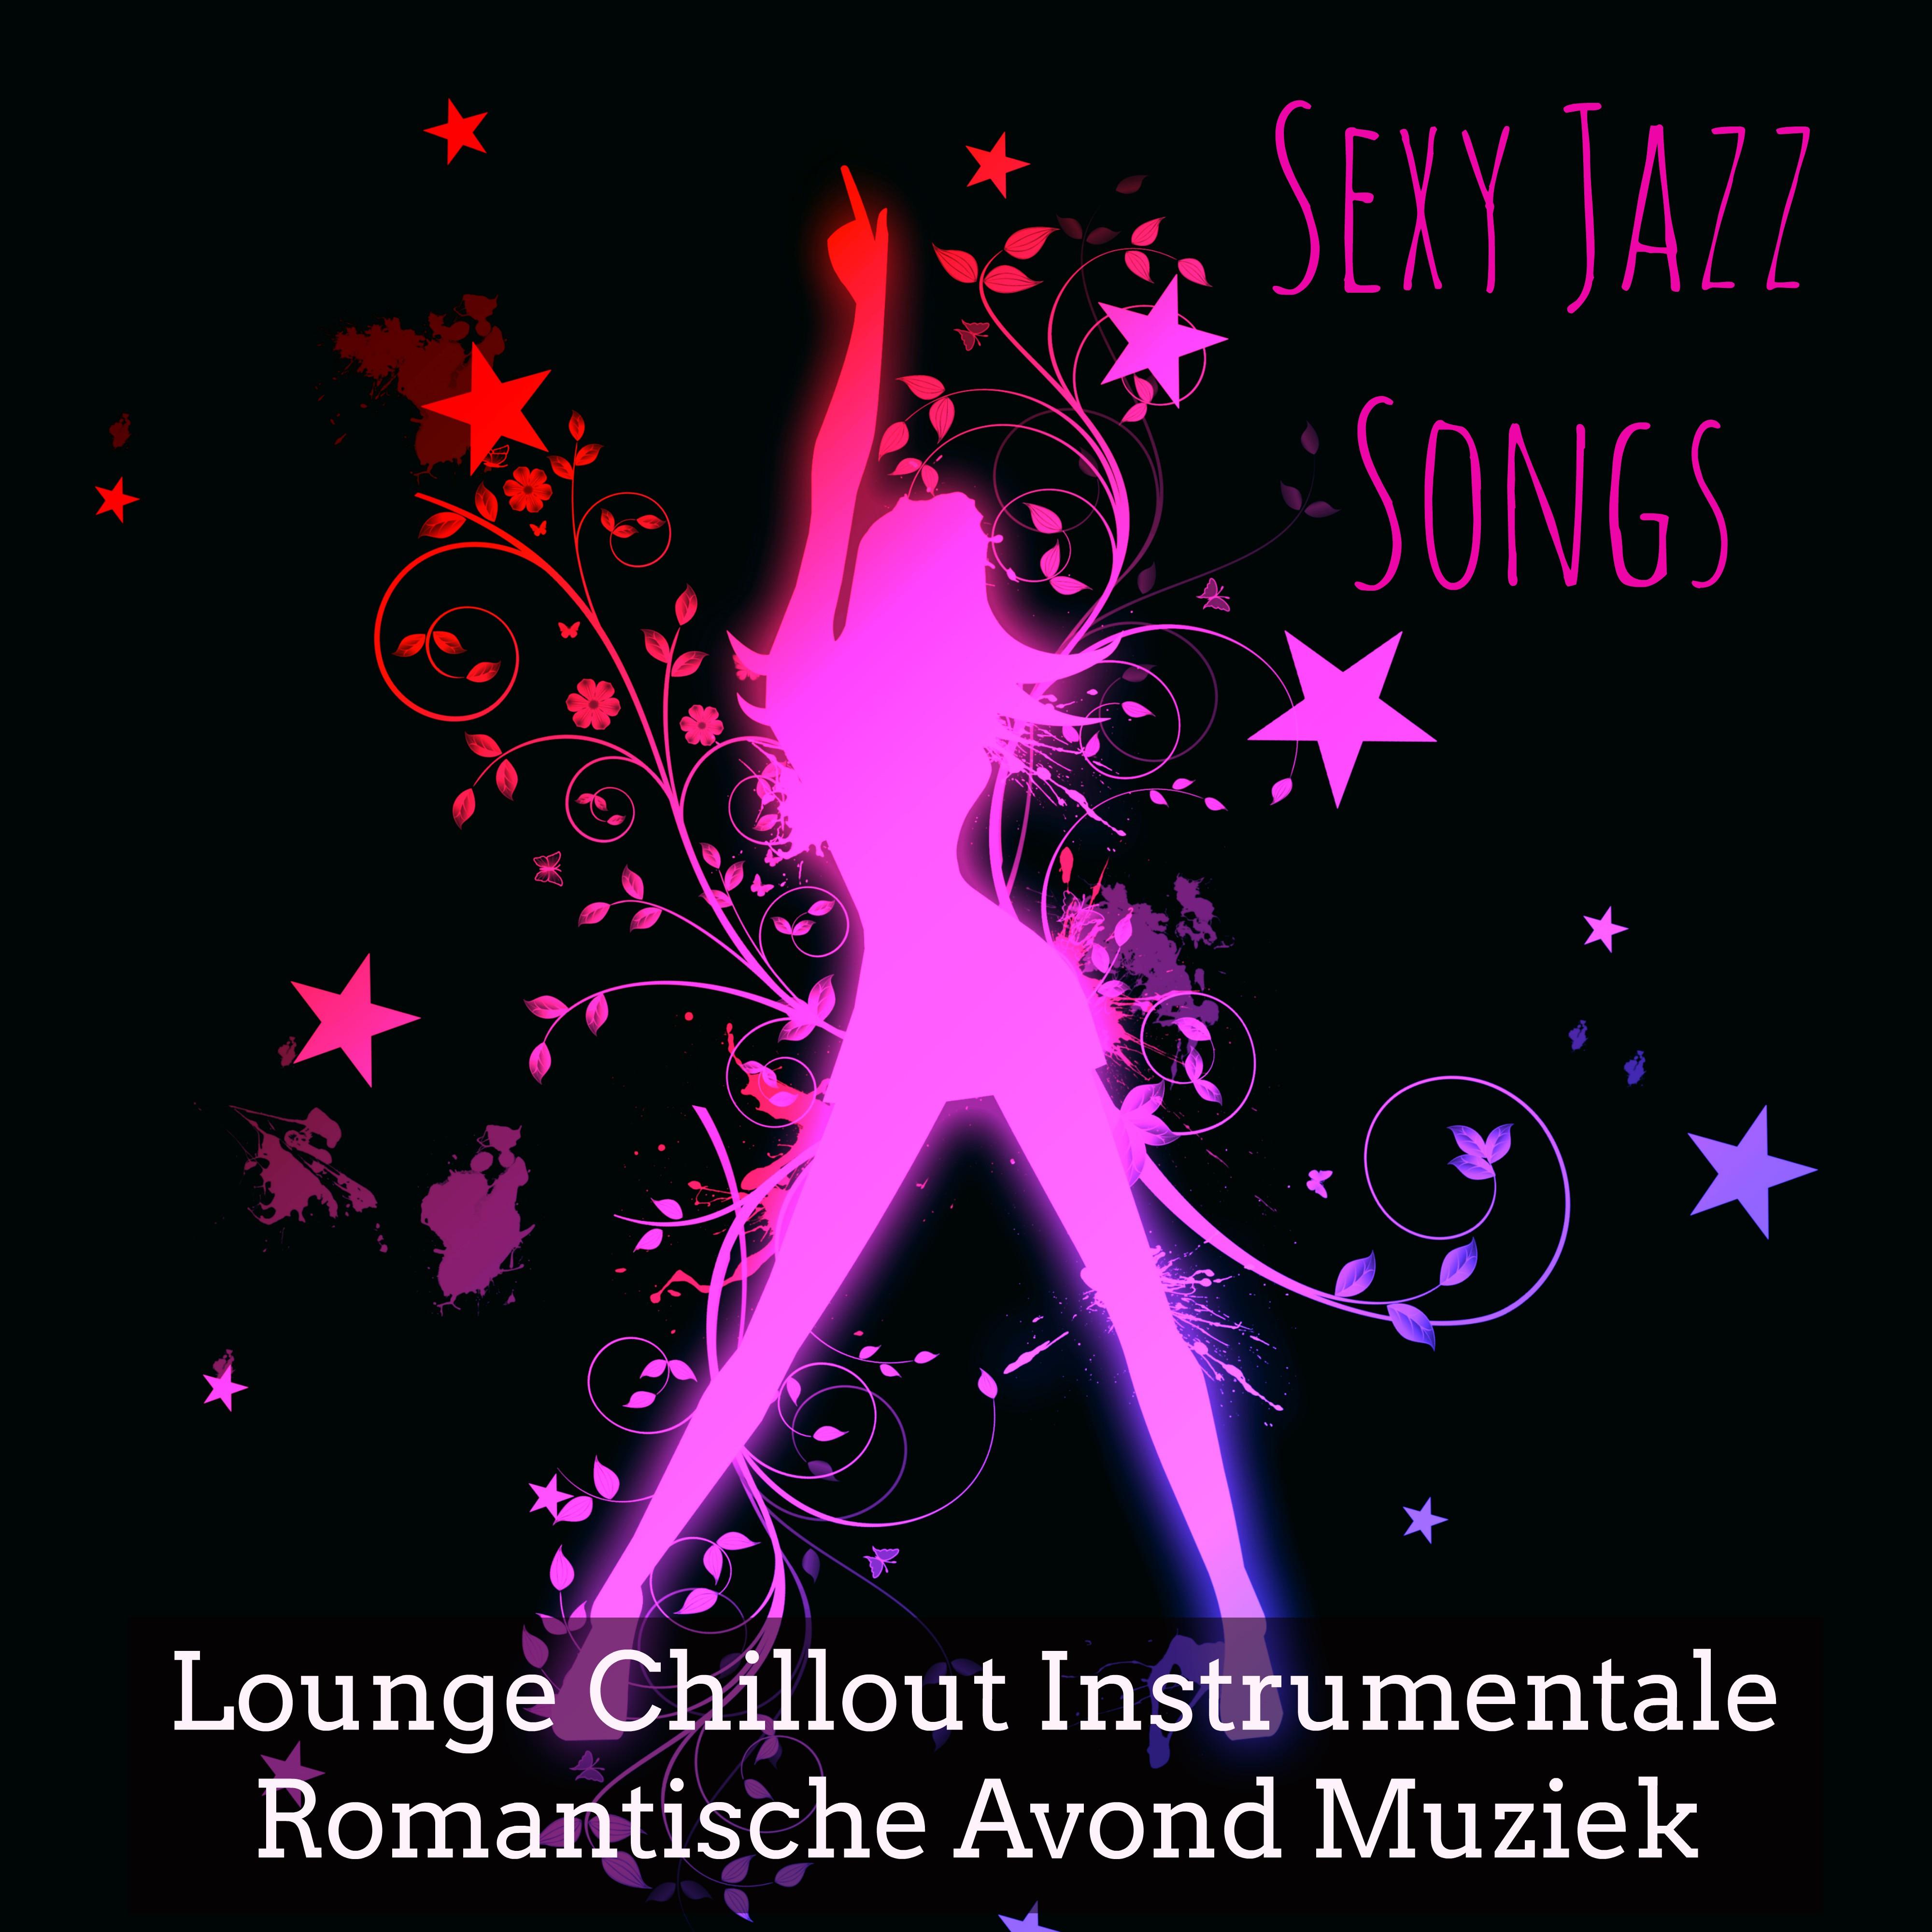 Jazz Songs  Lounge Chillout Instrumentale Romantische Avond Muziek voor Club Prive